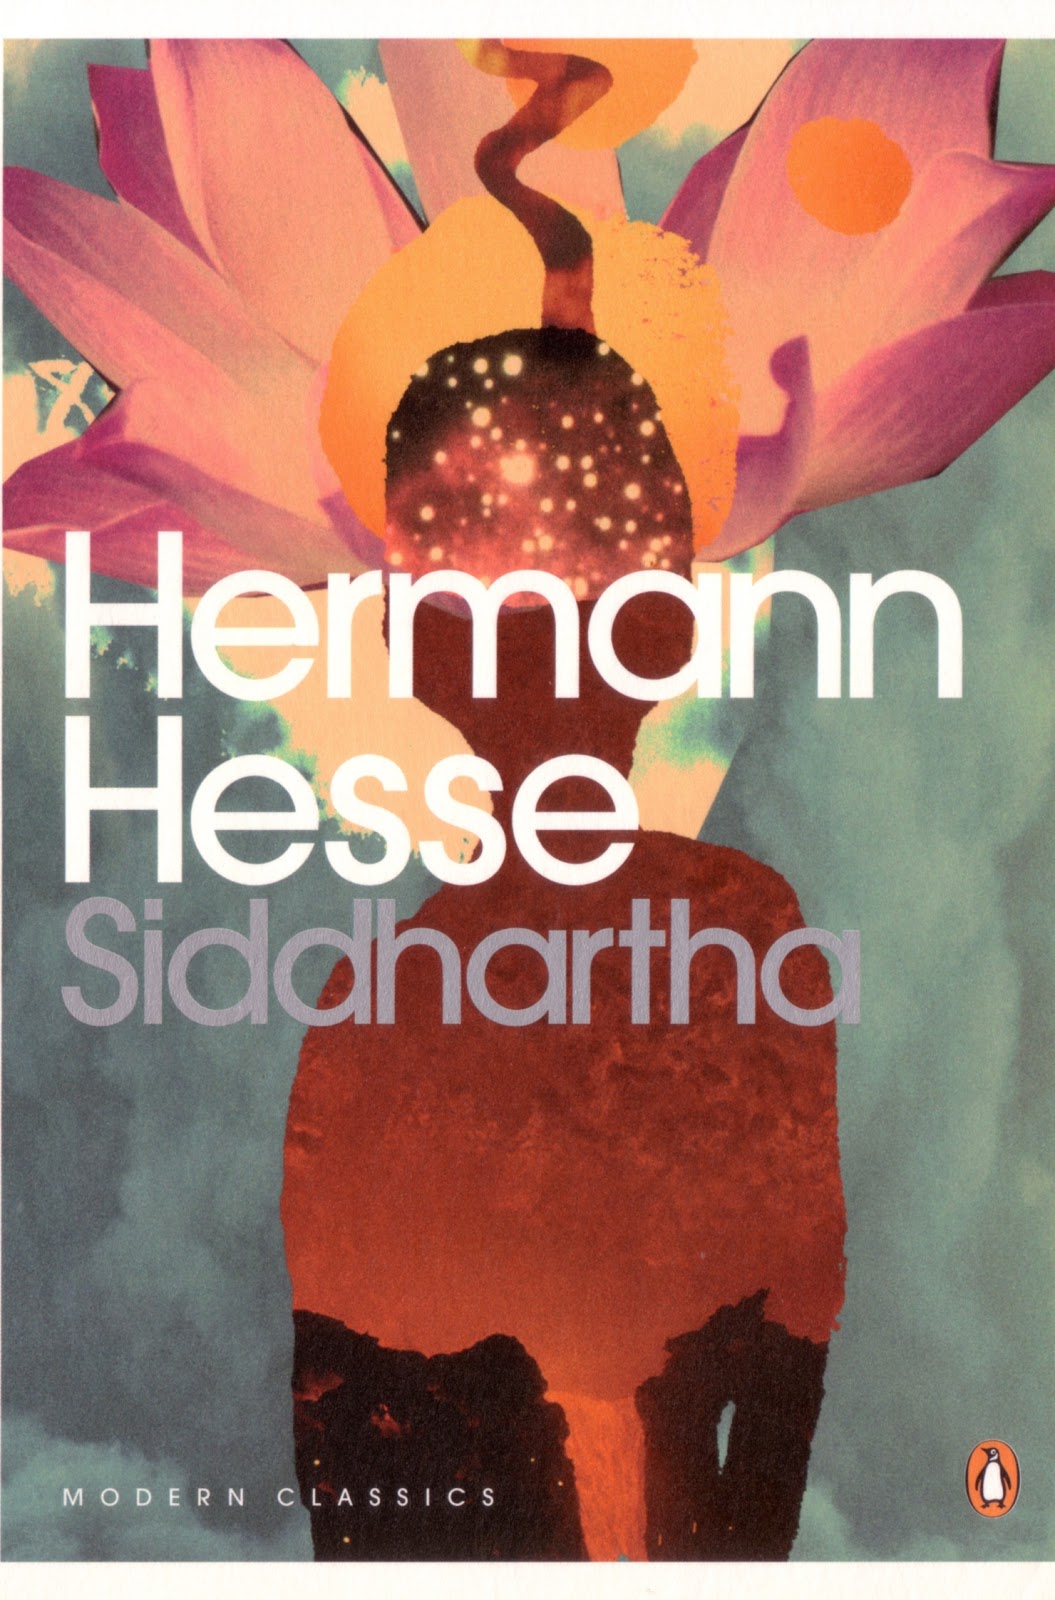 Paper Plane Book Reviews: Siddhartha by Hermann Hesse